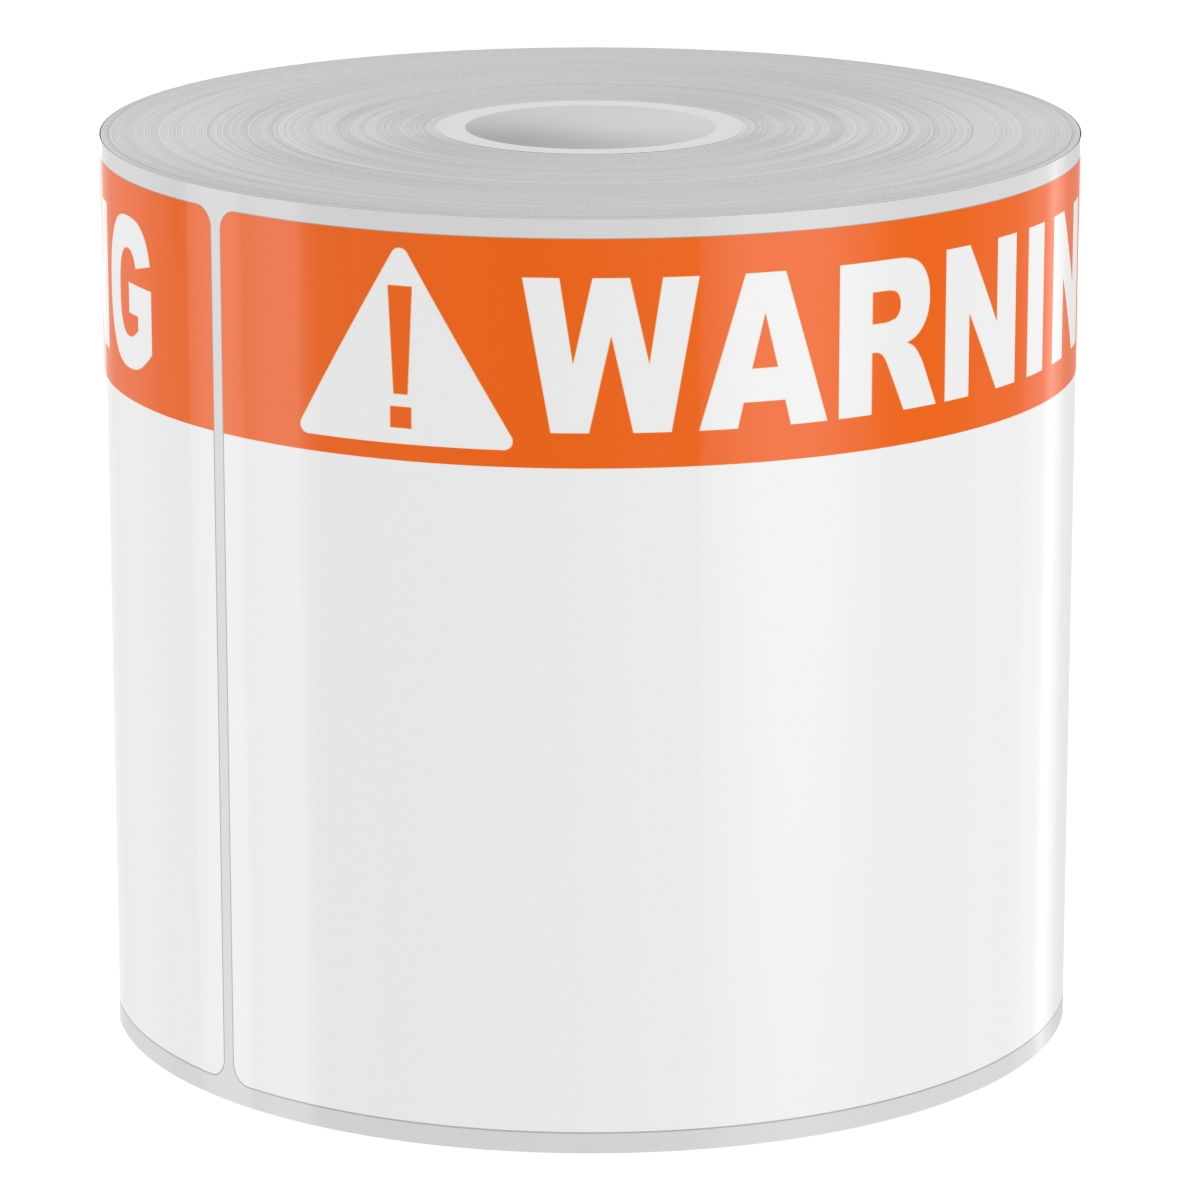 250 4in x 6in High-Performance Arc Flash Labels White Warning on Orange Header